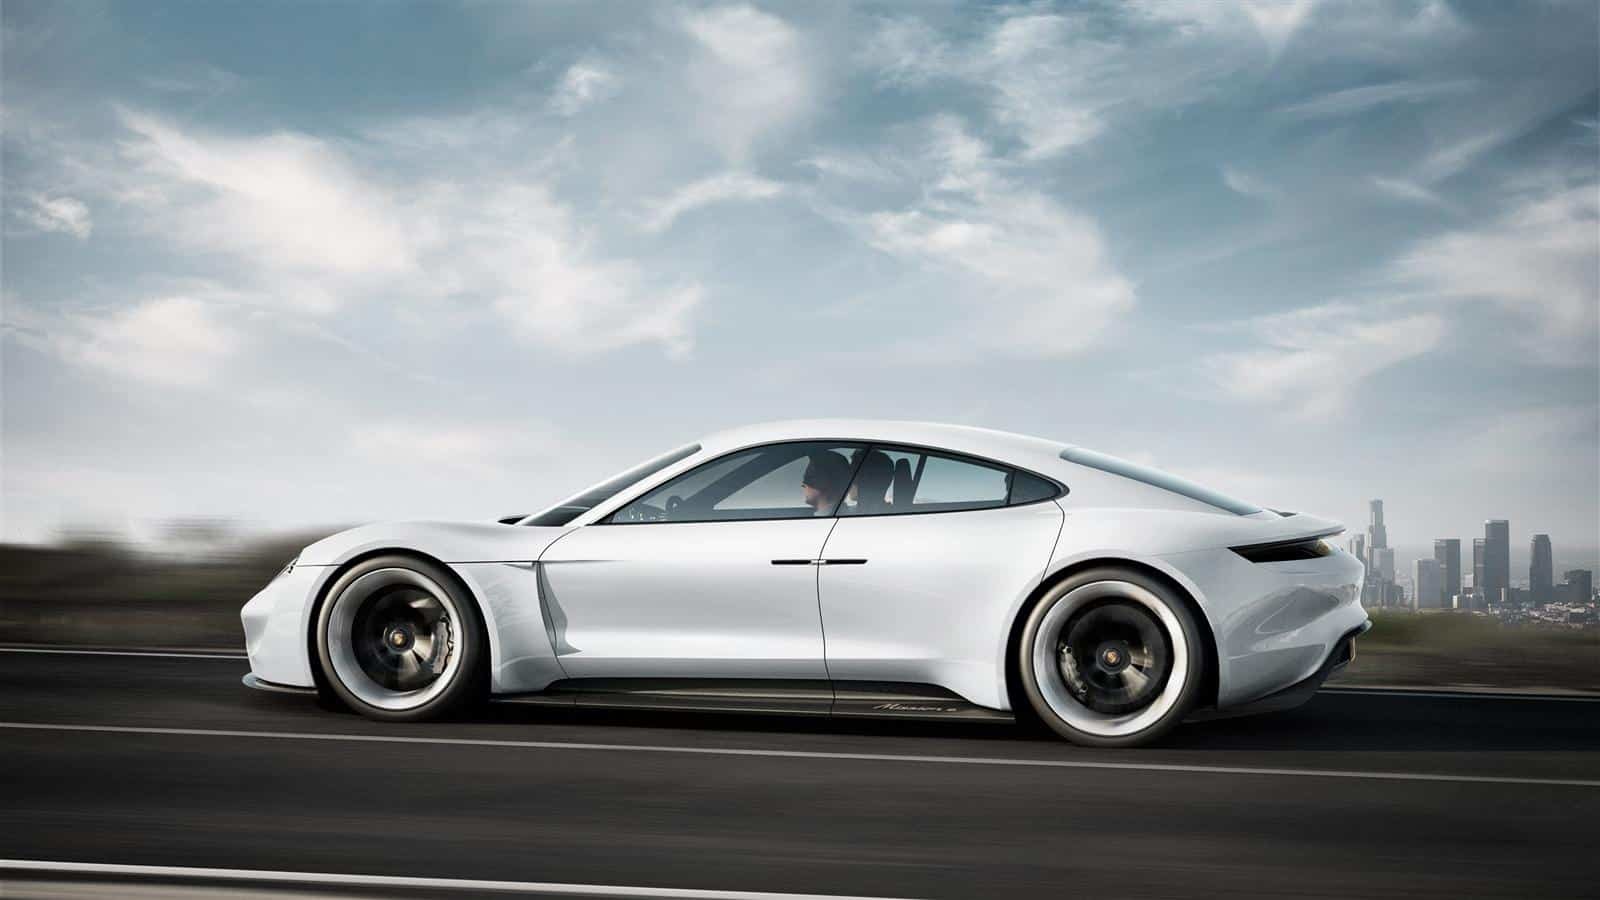 Porsche's Mission E sports sedan 2020 side view on road test drive spy shoot hd photos